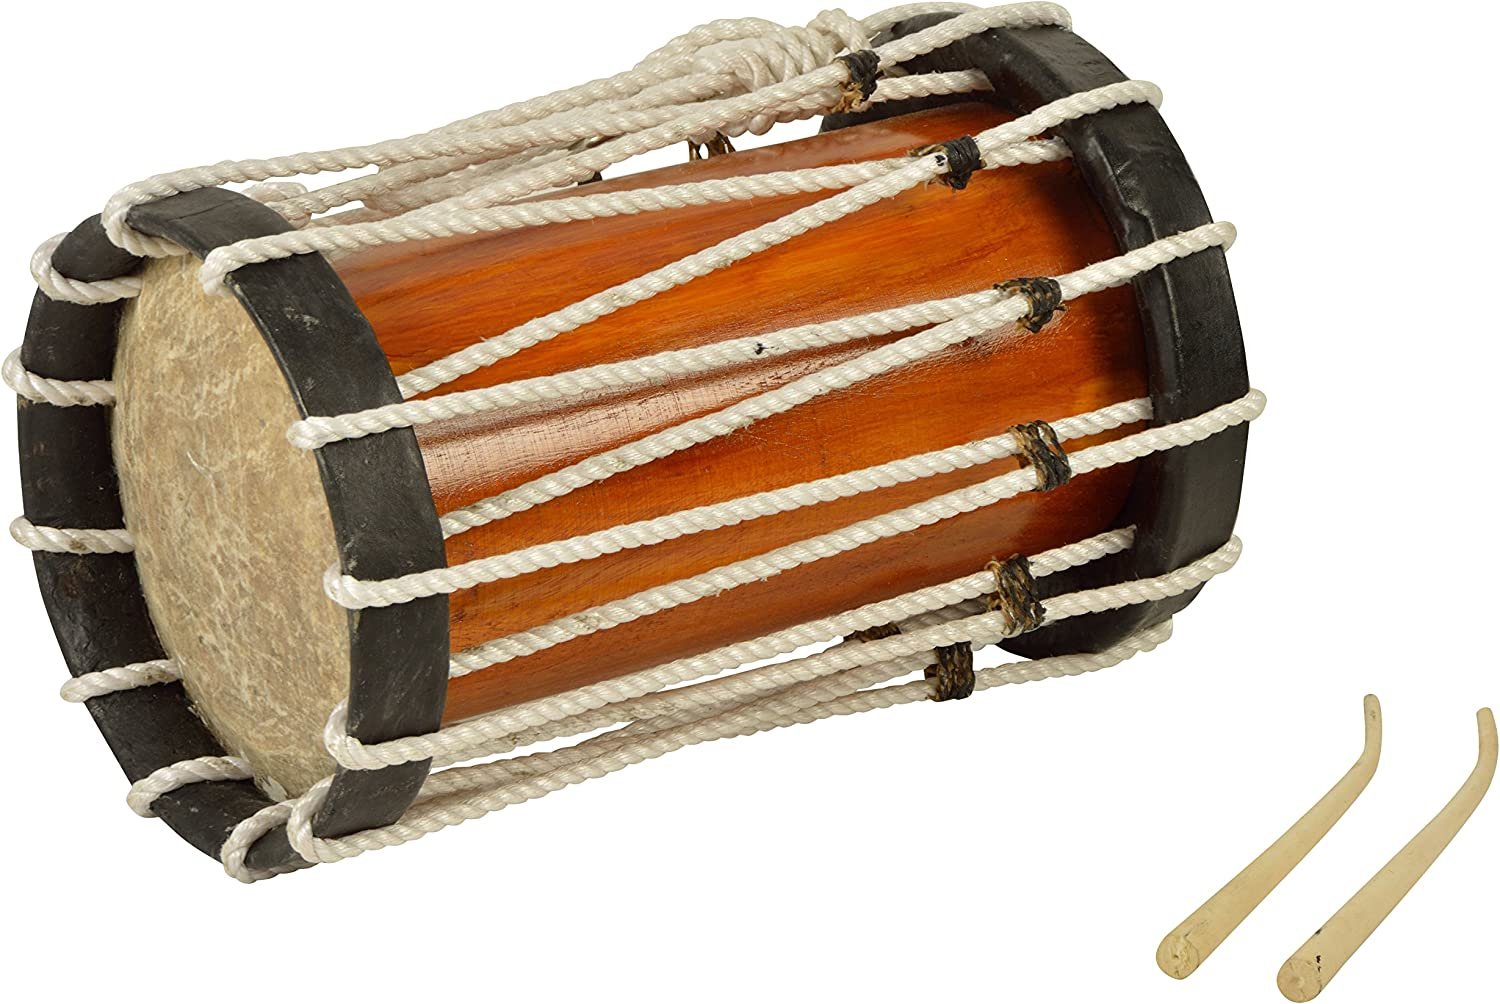 Музыкальный инструмент балла. Баньгу ударный музыкальный инструмент. Бамбуковый музыкальный инструмент. Механические музыкальные инструменты. Музыкальные инструменты из дерева.